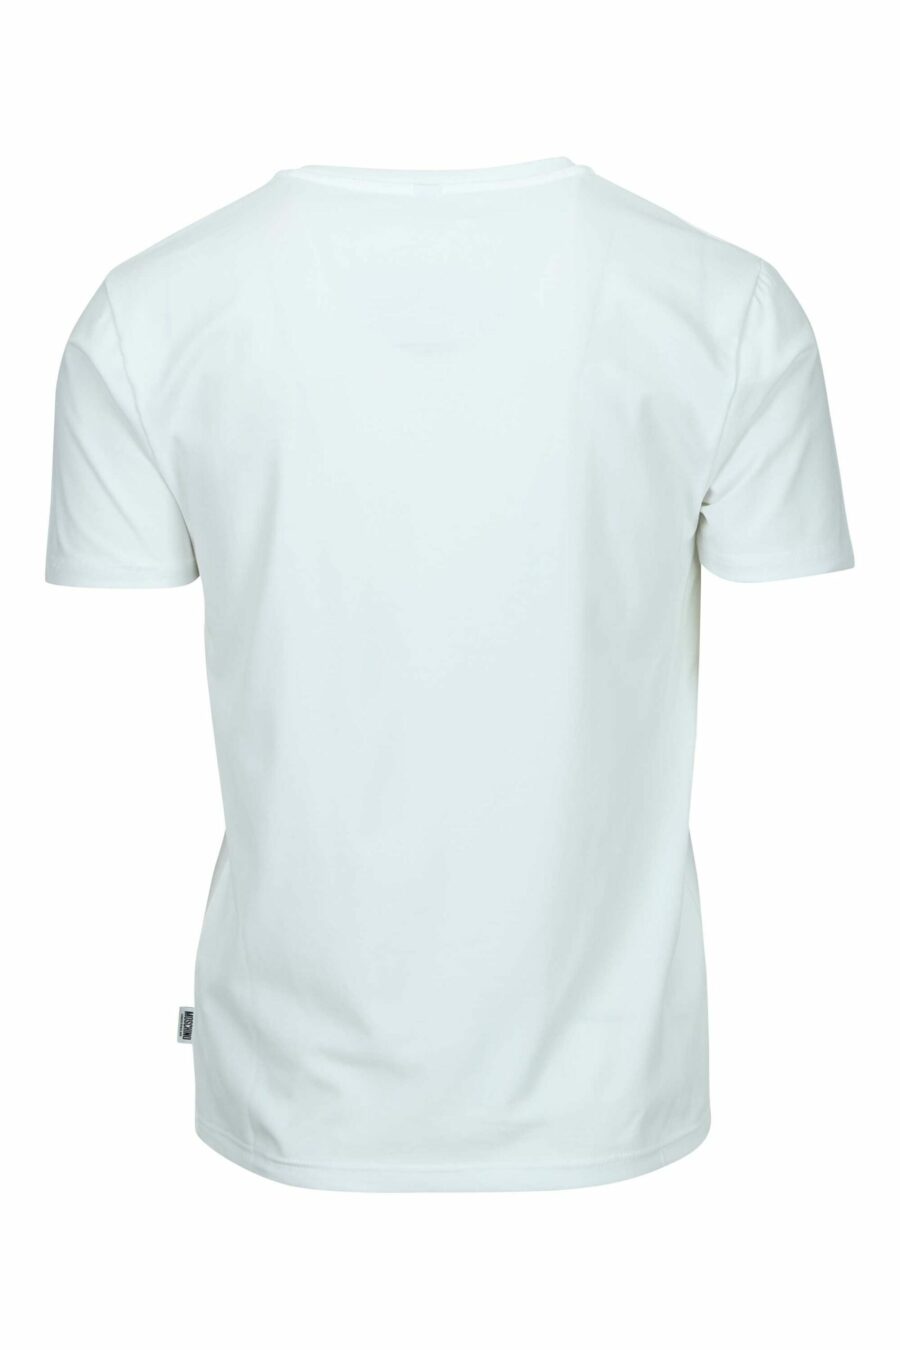 T-shirt branca com mini logótipo de urso "underbear" - 667113605678 1 scaled